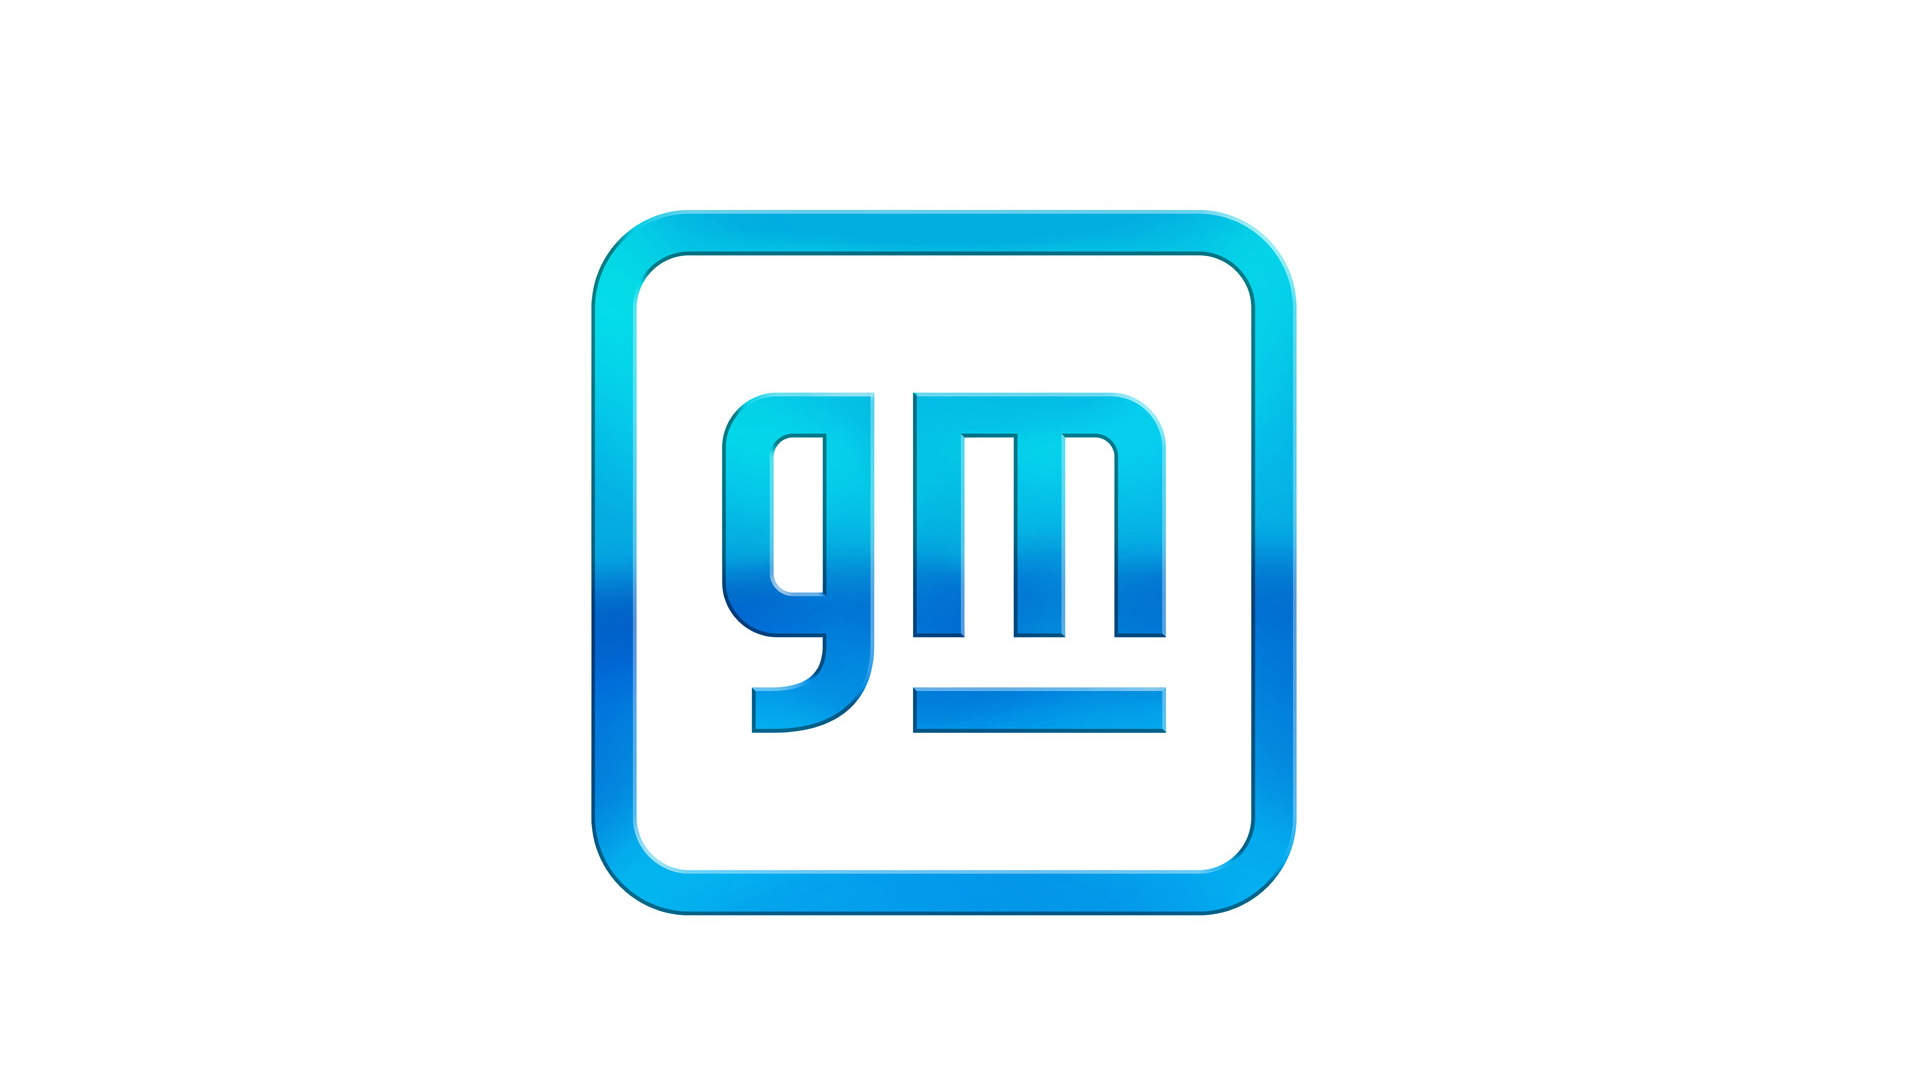 General Motors' new logo